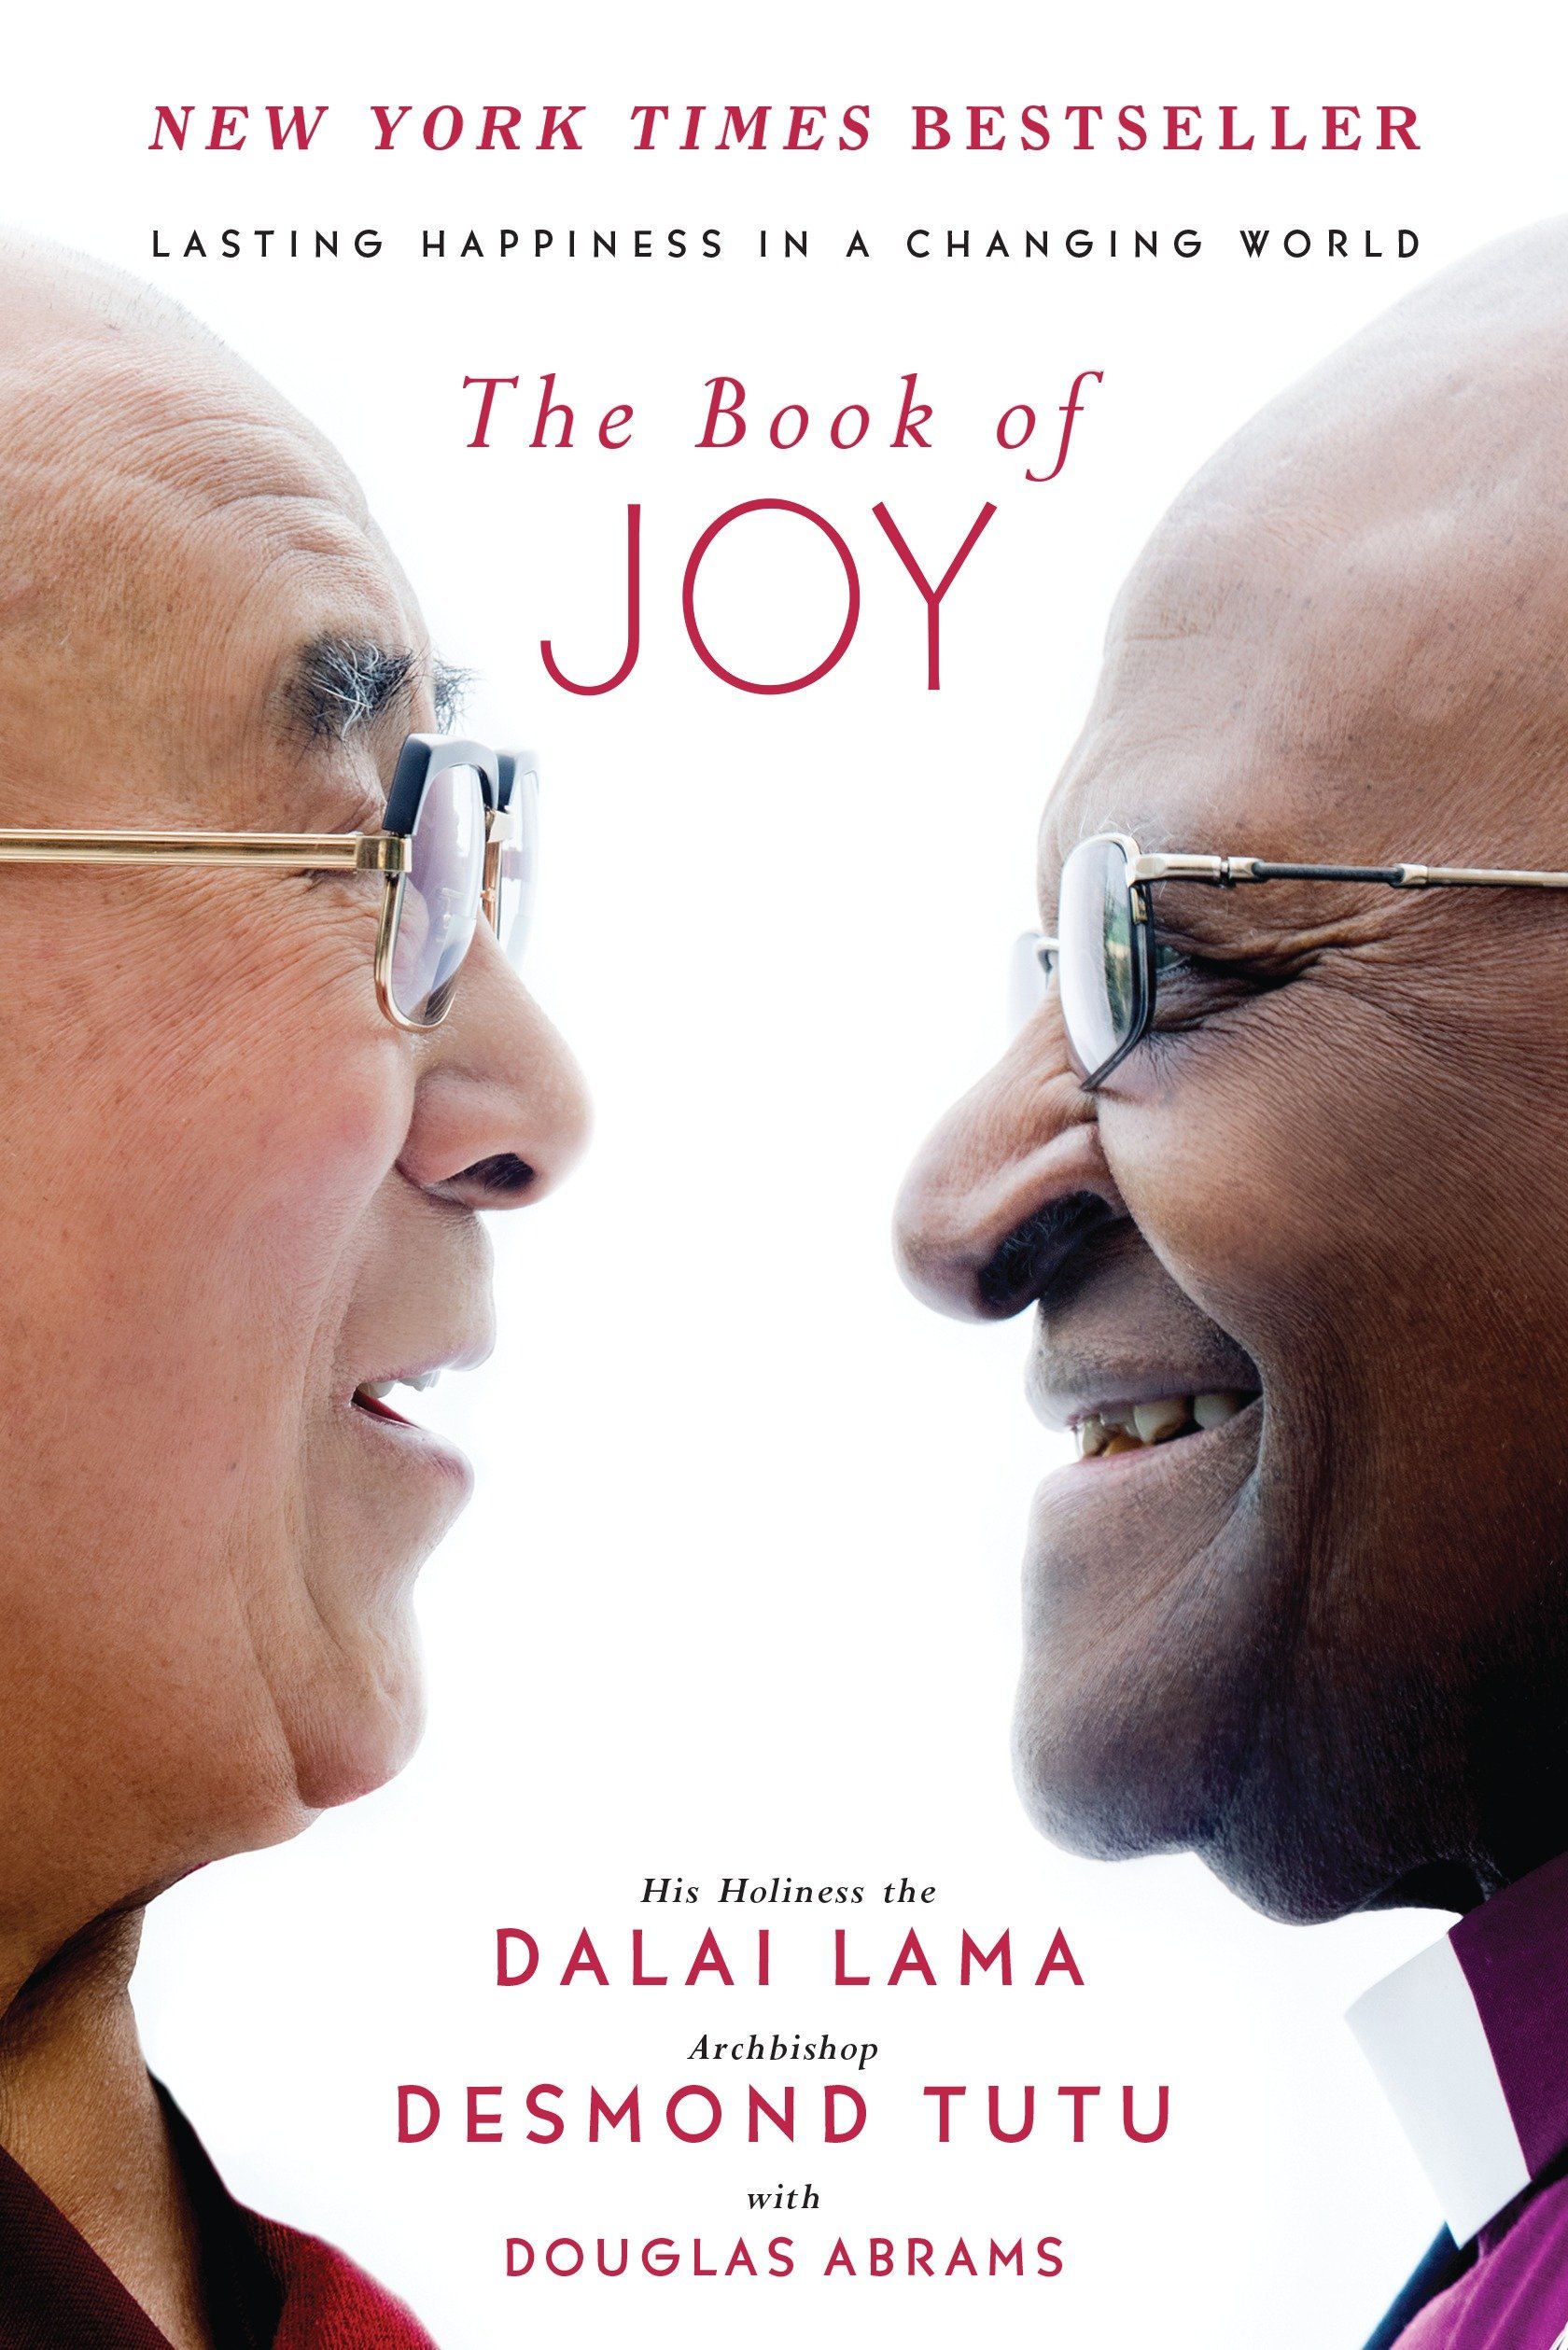 'The Book of Joy' by the Dalai Lama and Desmond Tutu